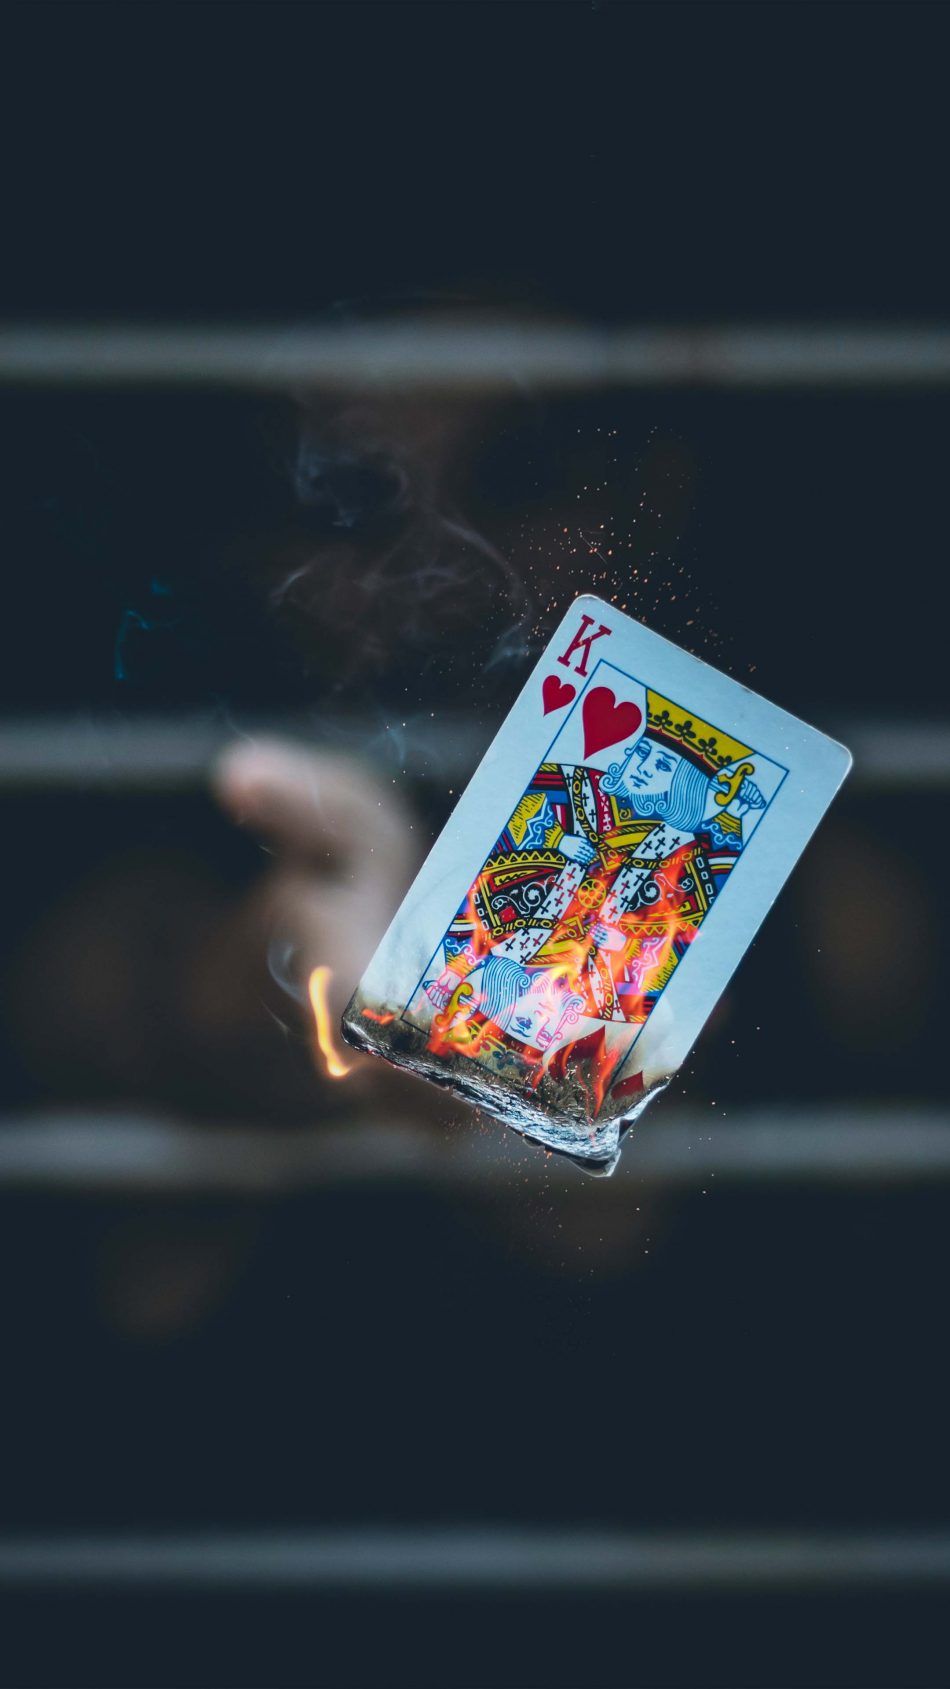 King of Card Hand Flame Portrait Dark Background 4K Ultra HD Mobile Wallpaper